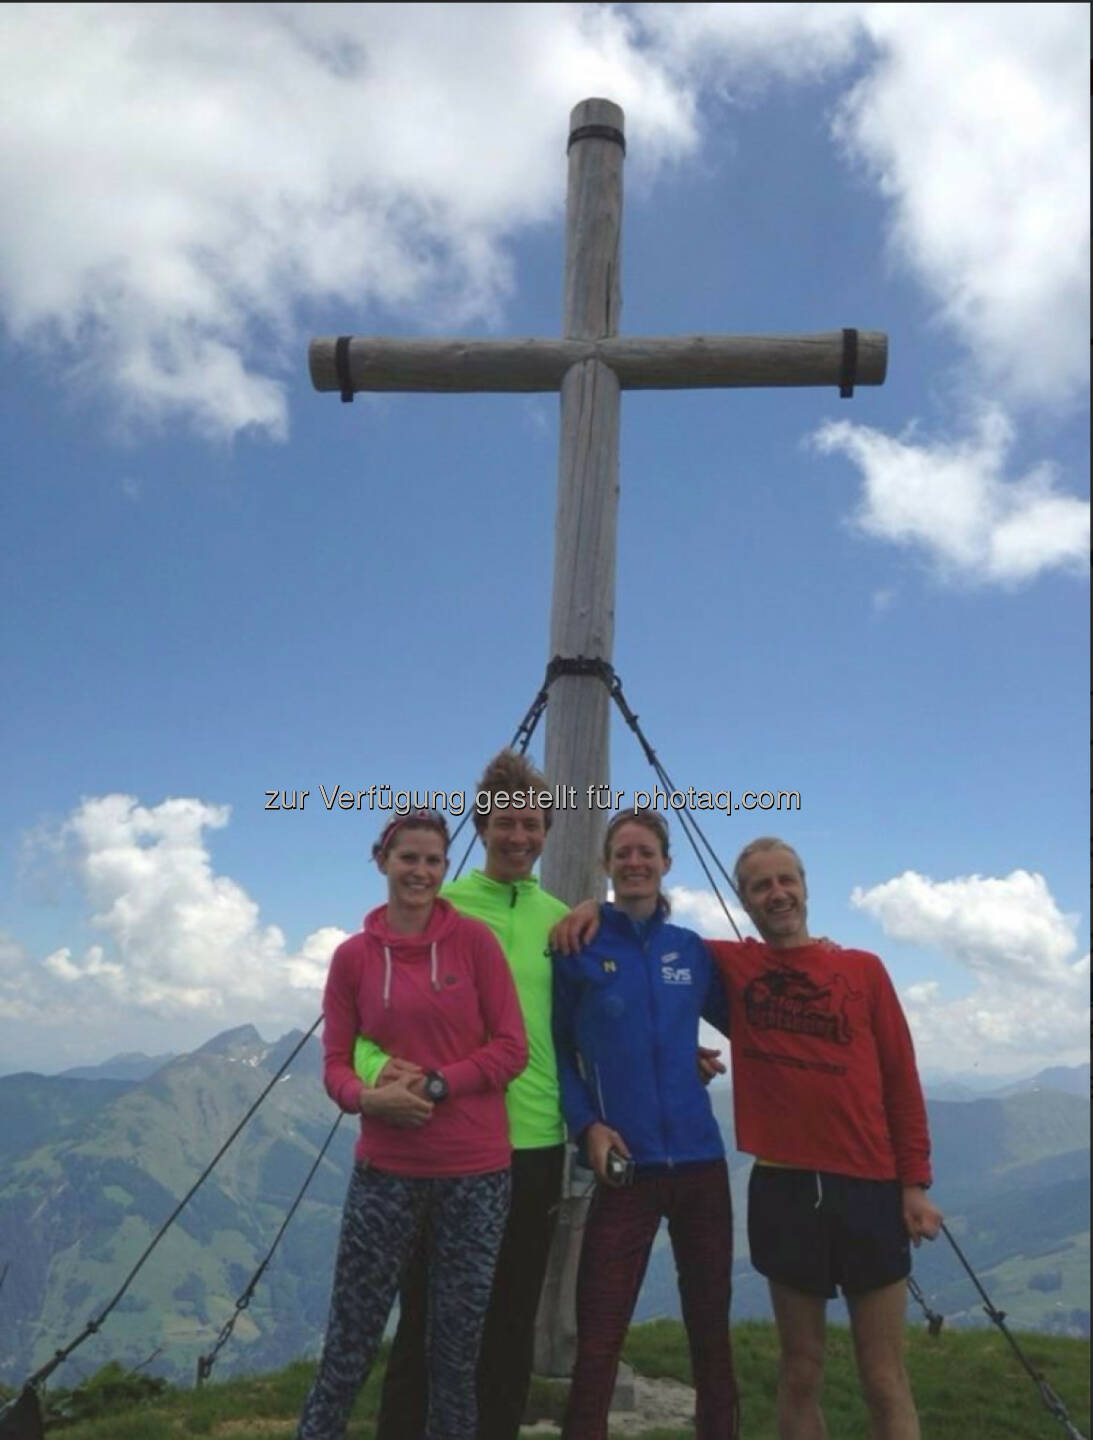 Corinna Choun, Michael Szymoniuk, Siegerin Andrea Mayr, Andreas Stitz am Gipfel. Foto: Szymoniuk & friends